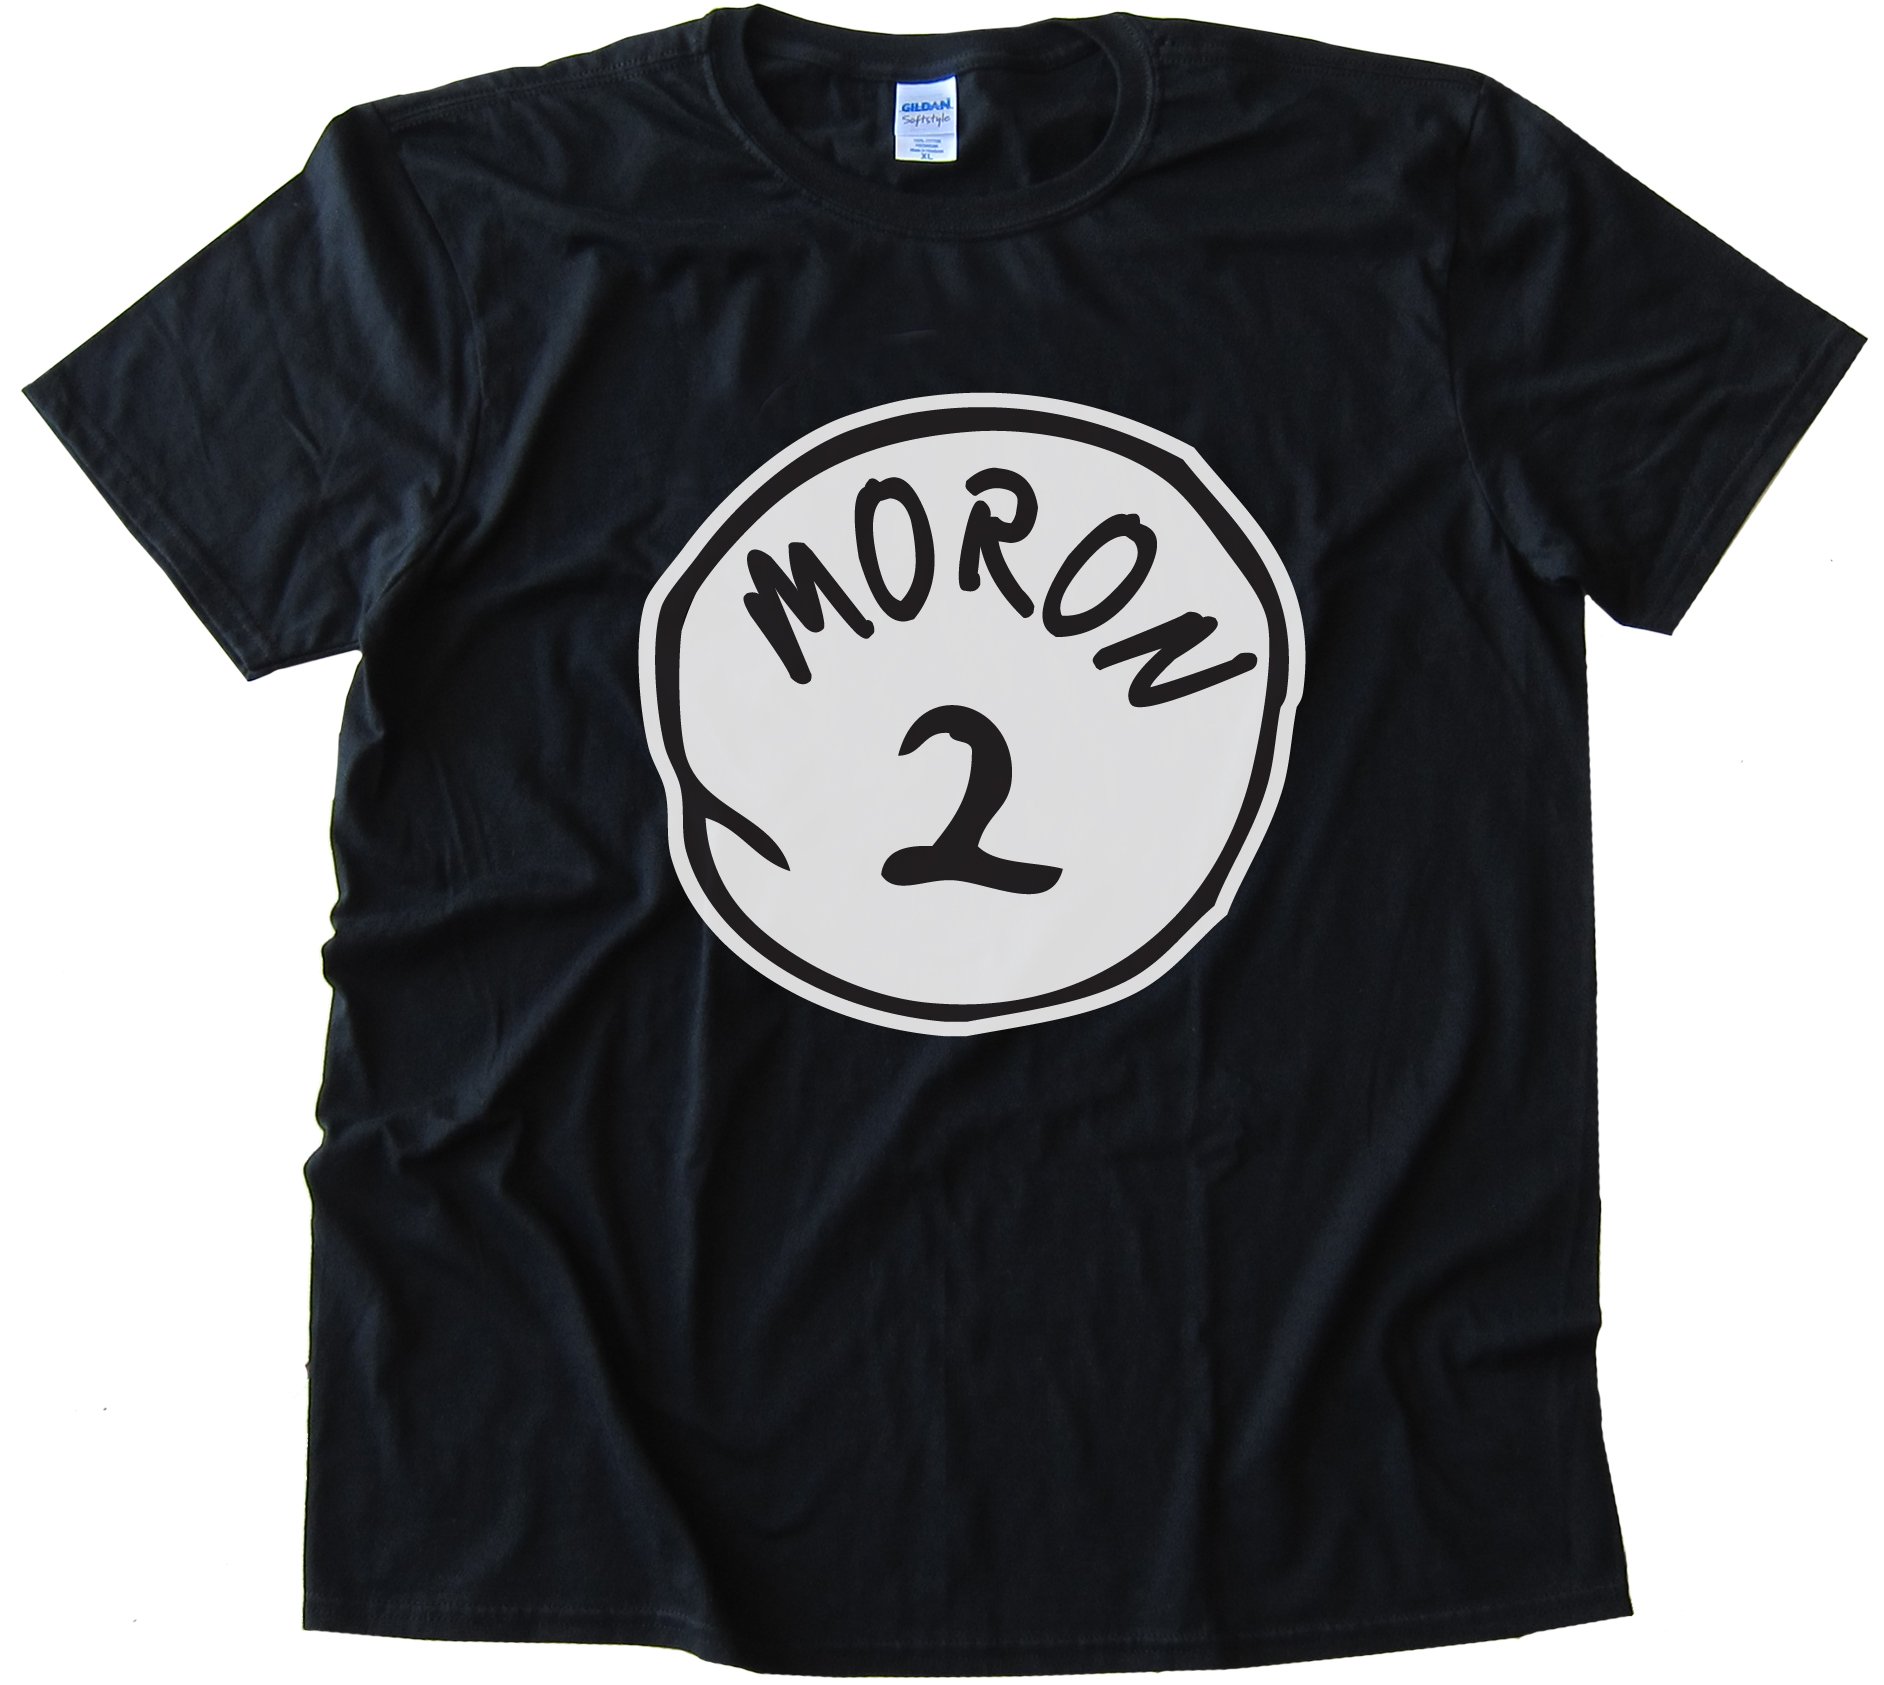 Moron 2 Perfect Match For Moron 1! - Parody Of Thing 1 Dr. Seuss Tee Shirt